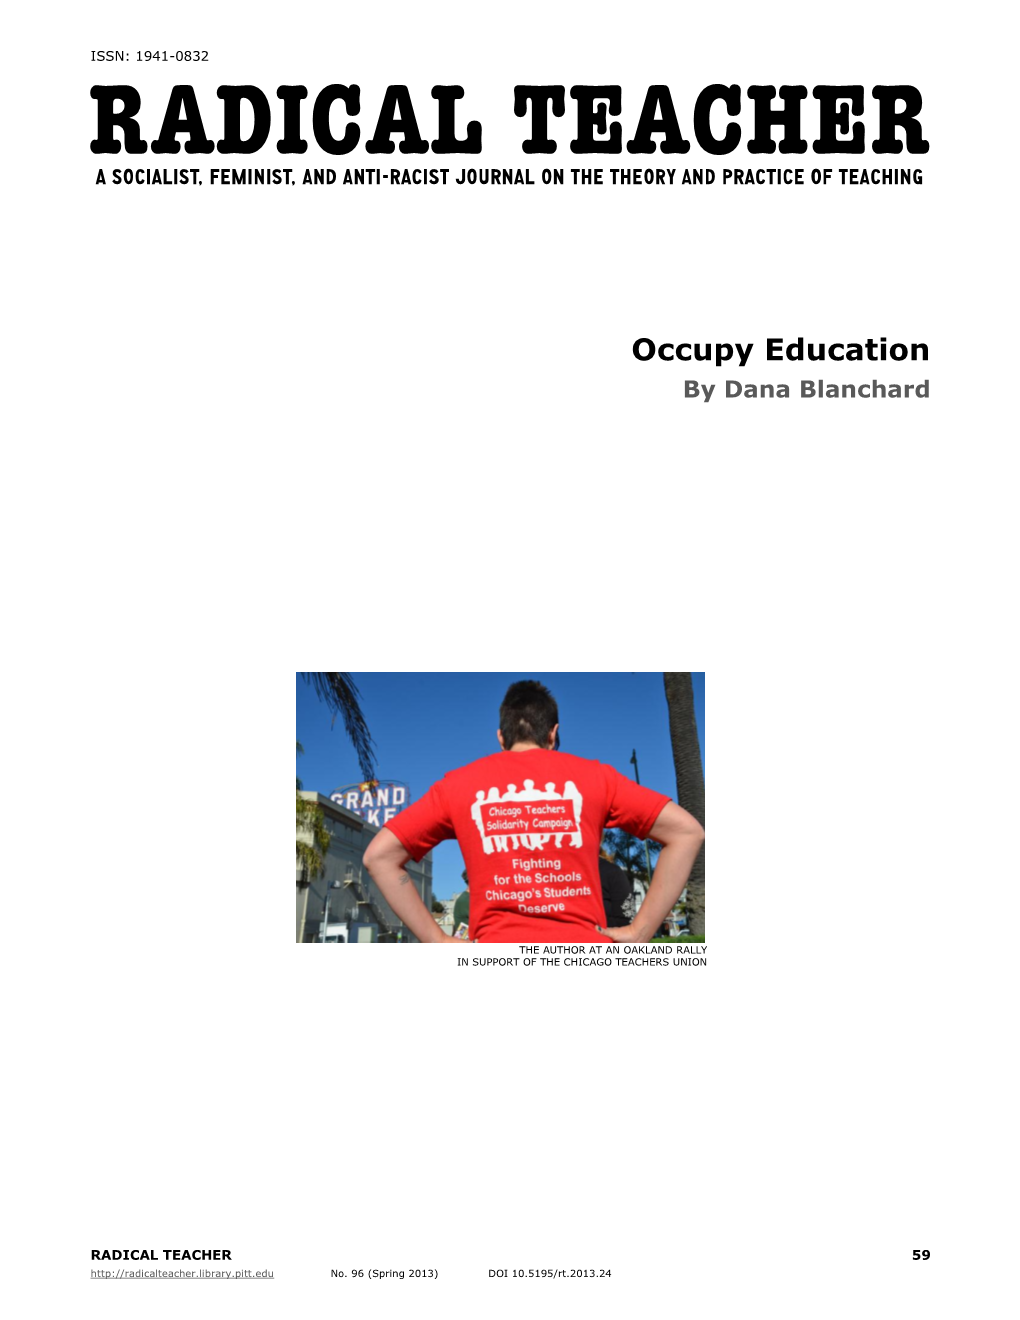 Occupy Education by Dana Blanchard